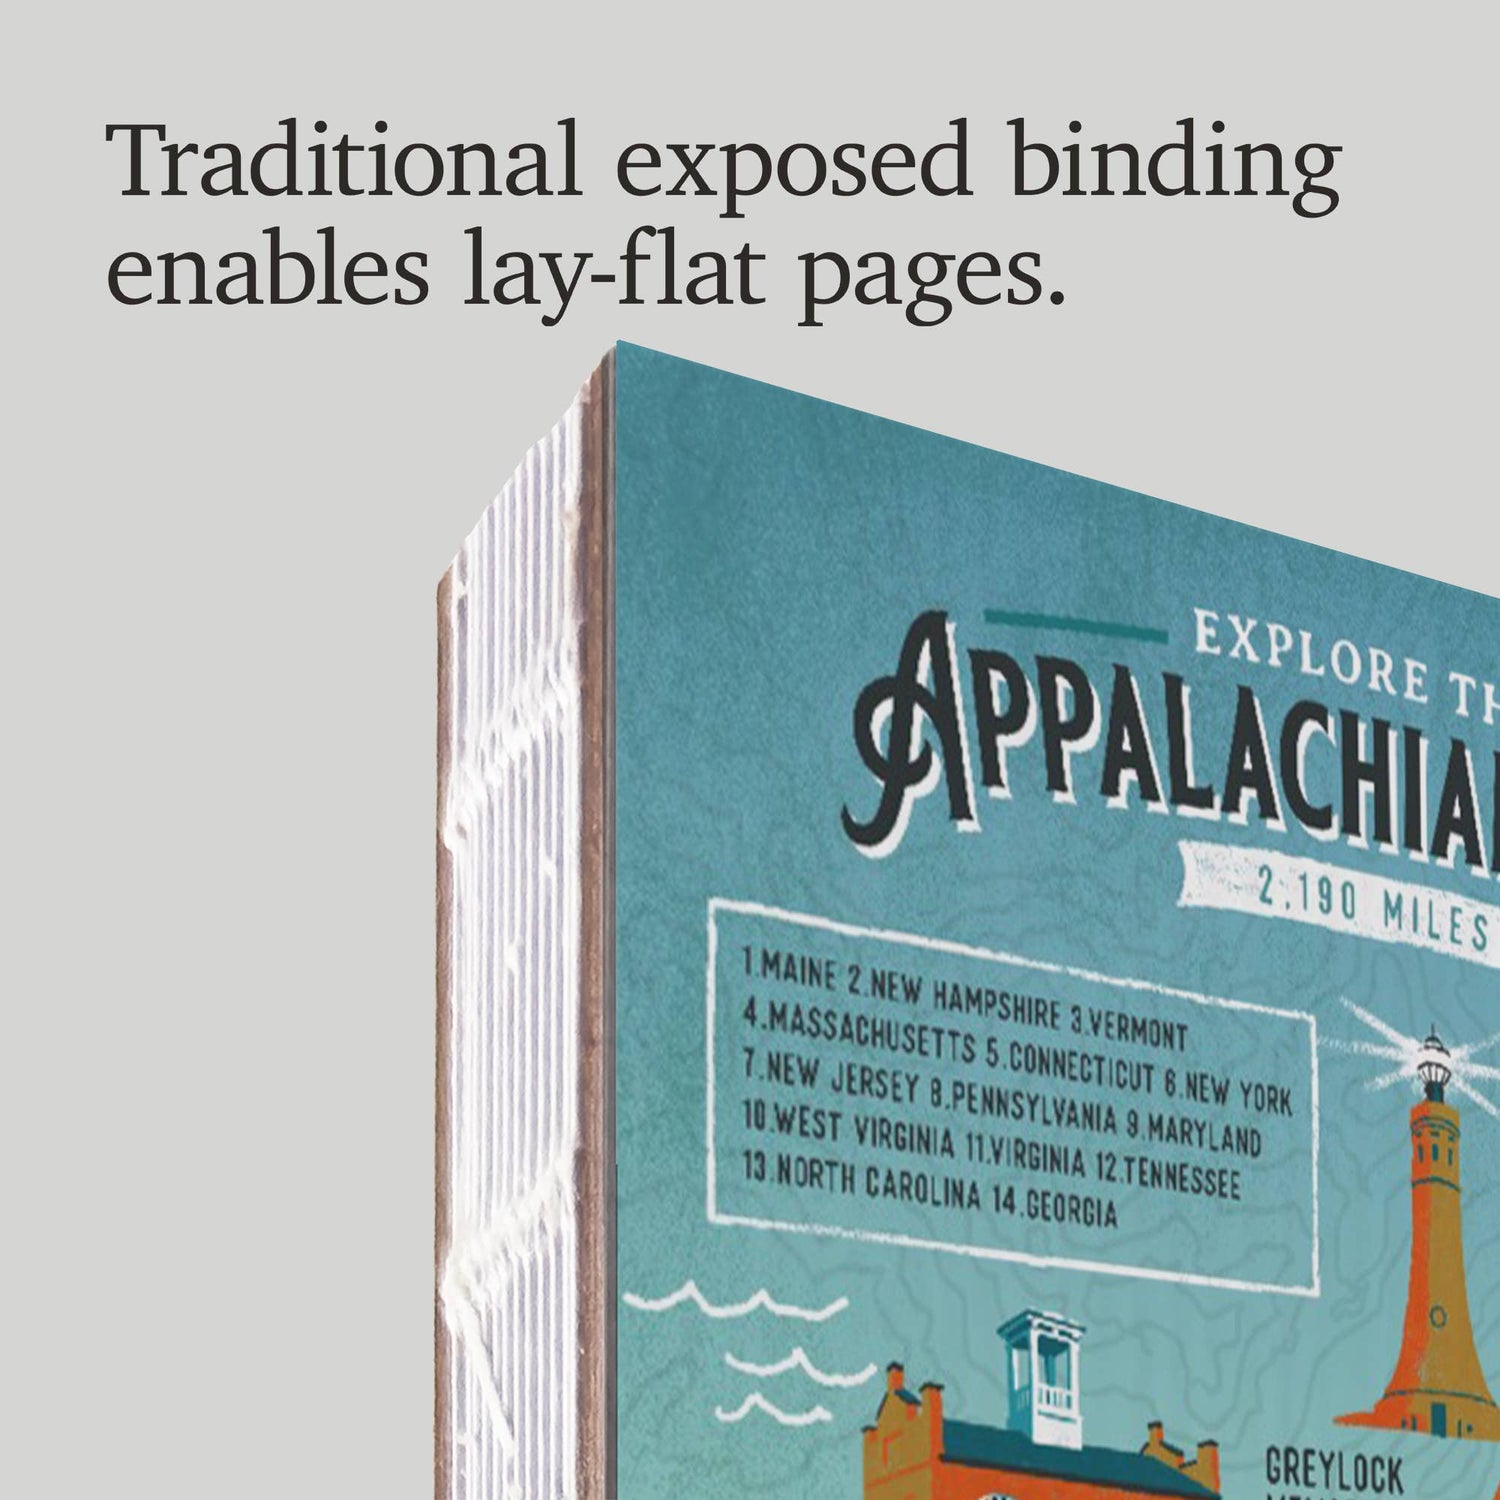 Explore the Appalachian Trail Map Premium Journal